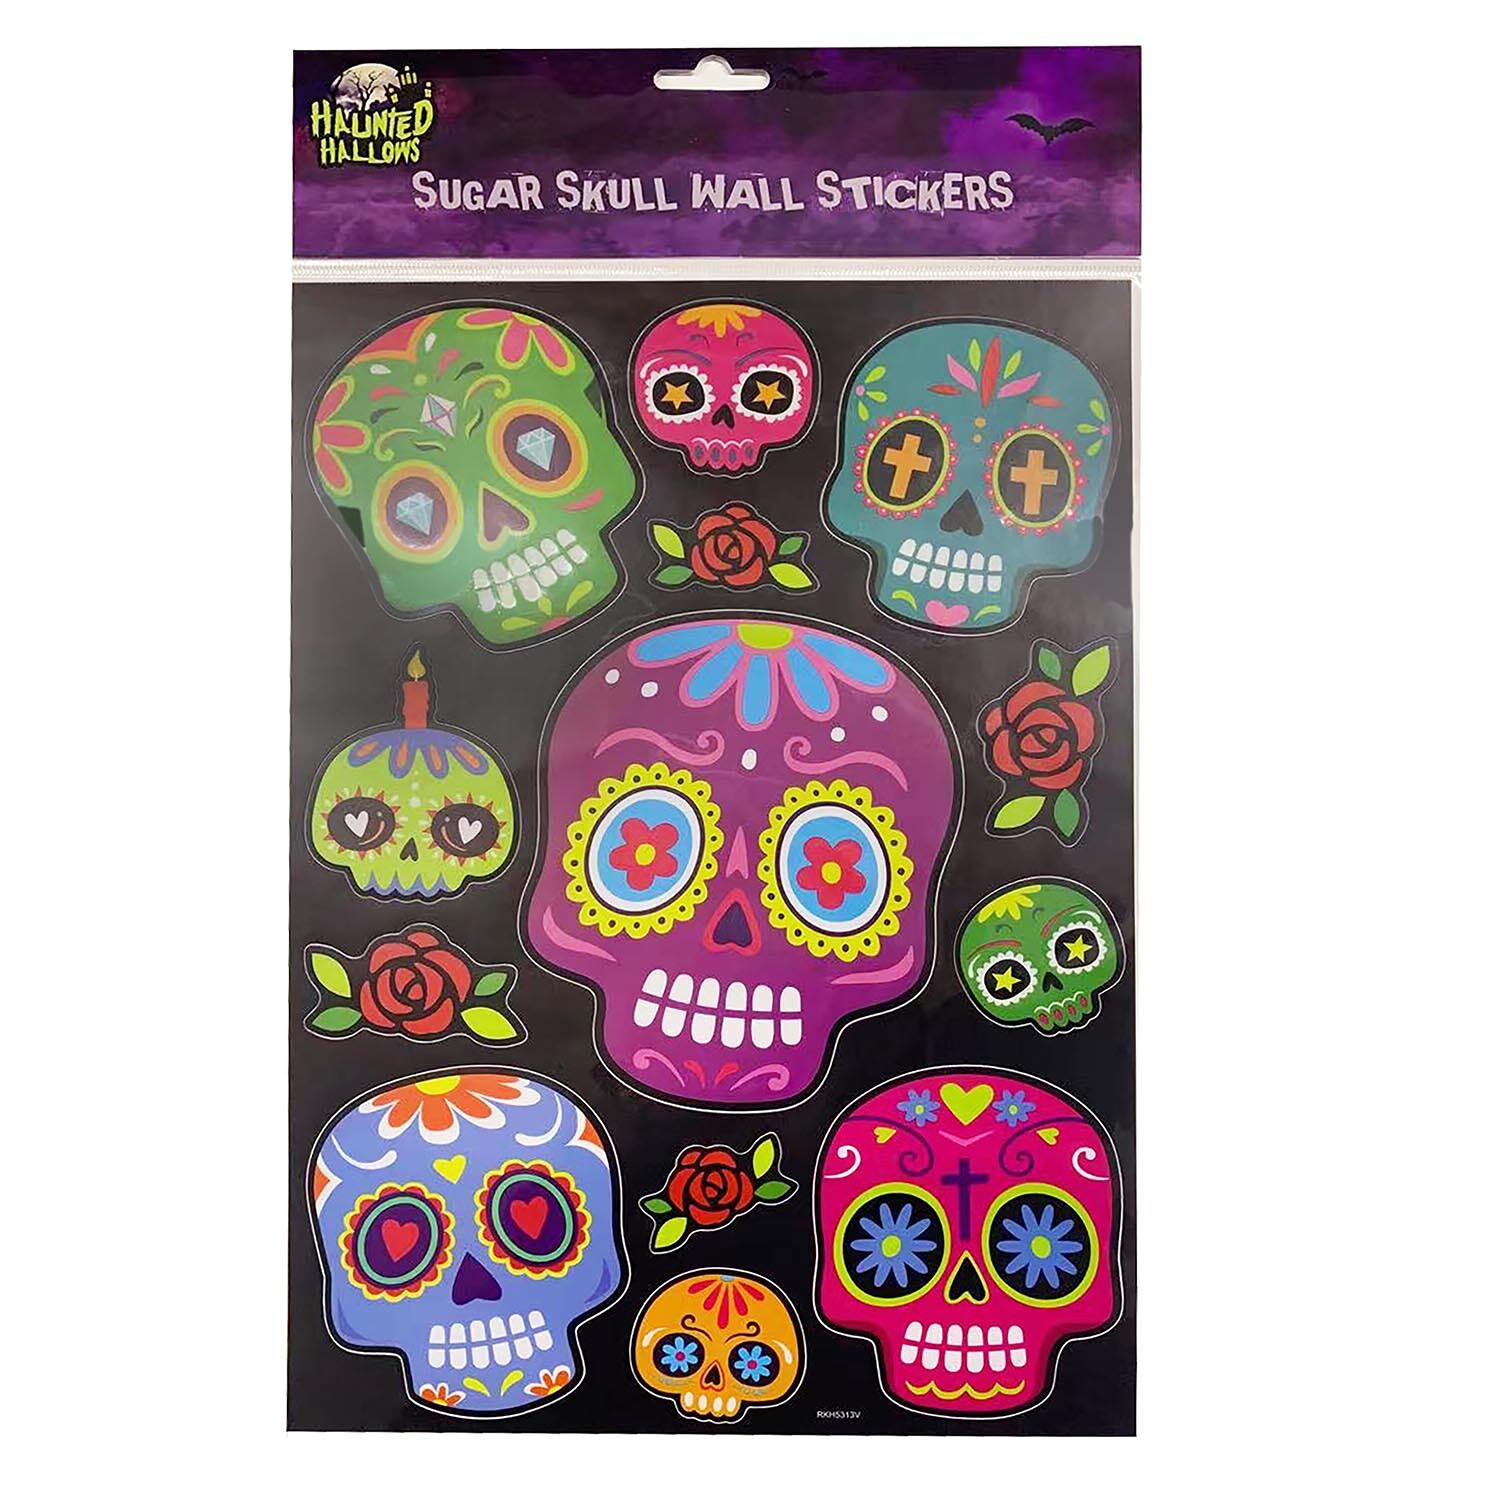 Sugar Skull Wall Stickers Image